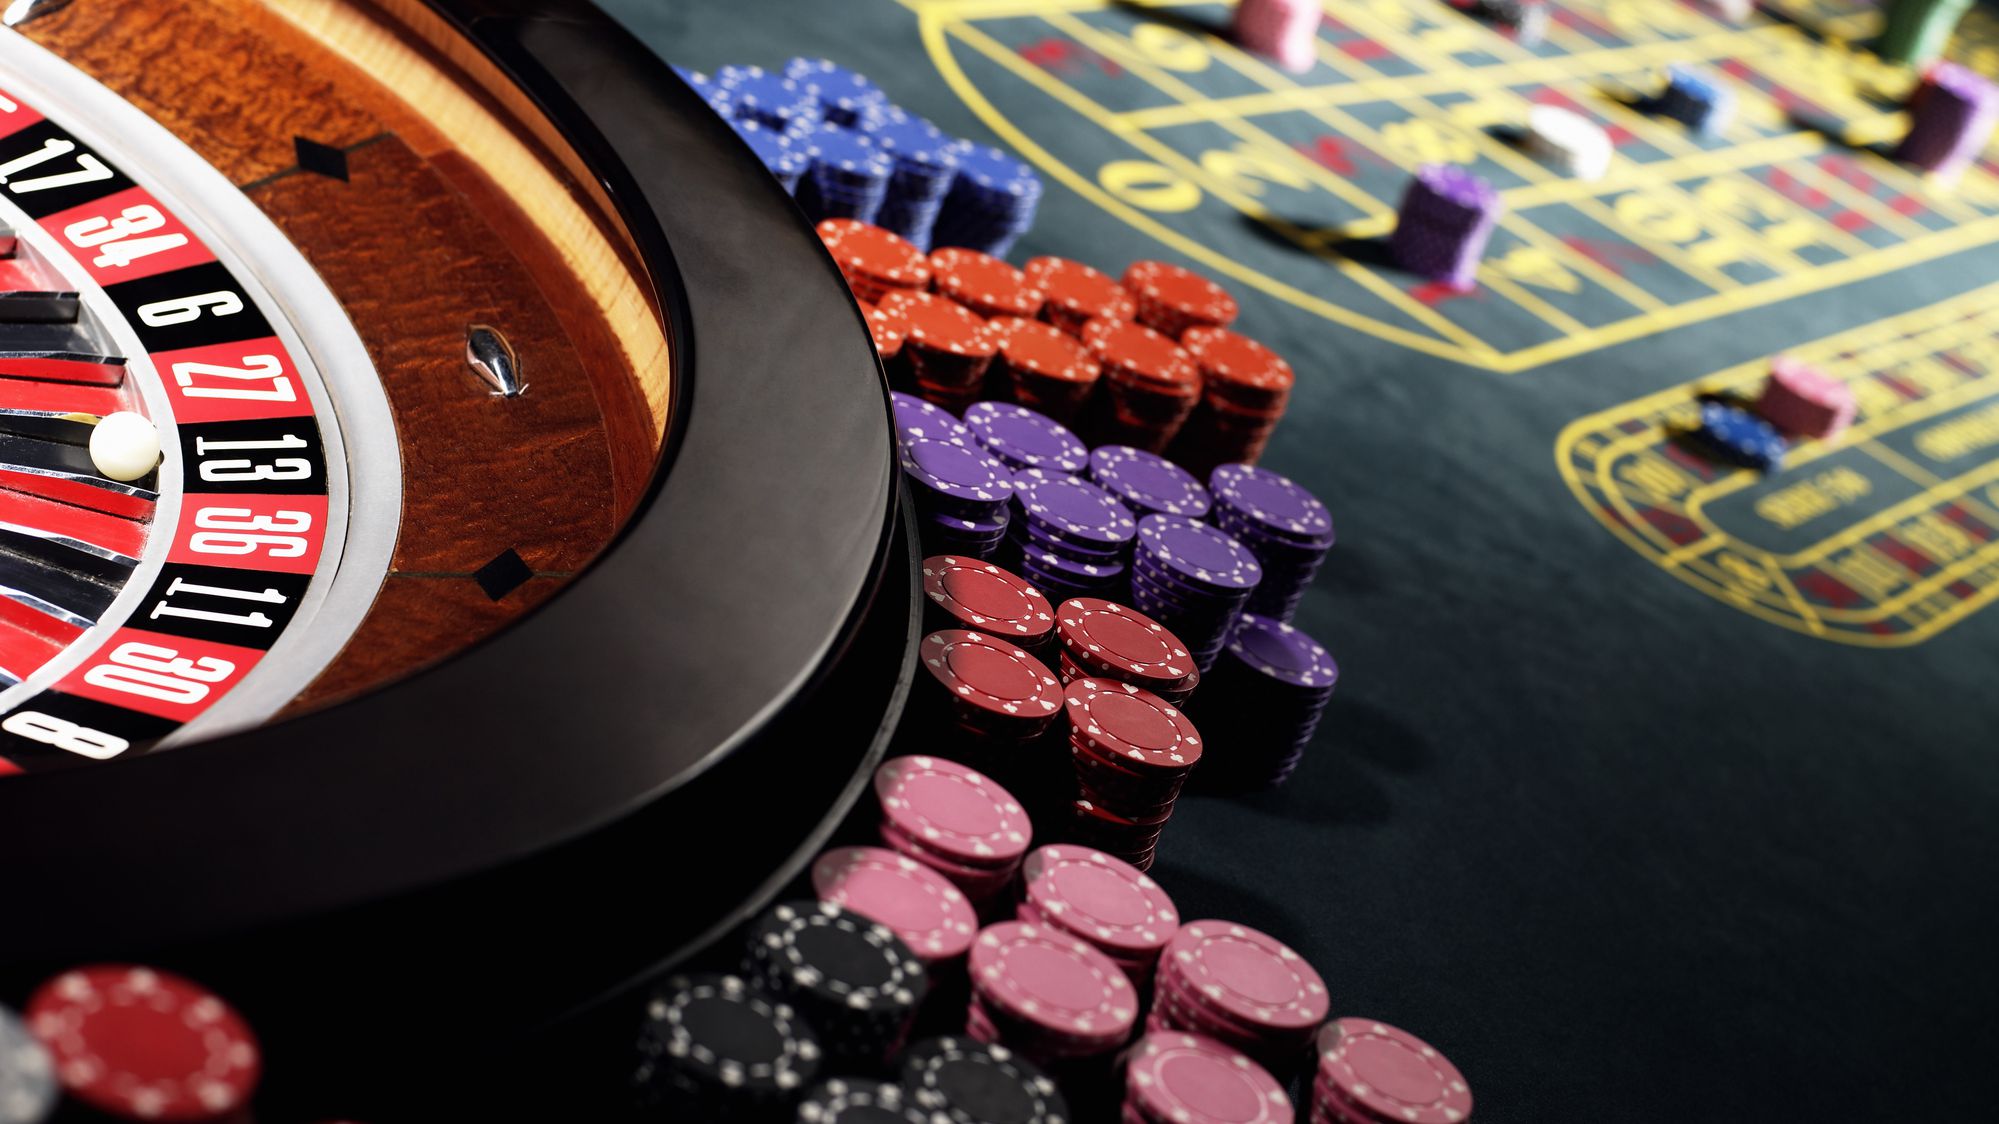 How to Write a Successful Casino Marketing Guide